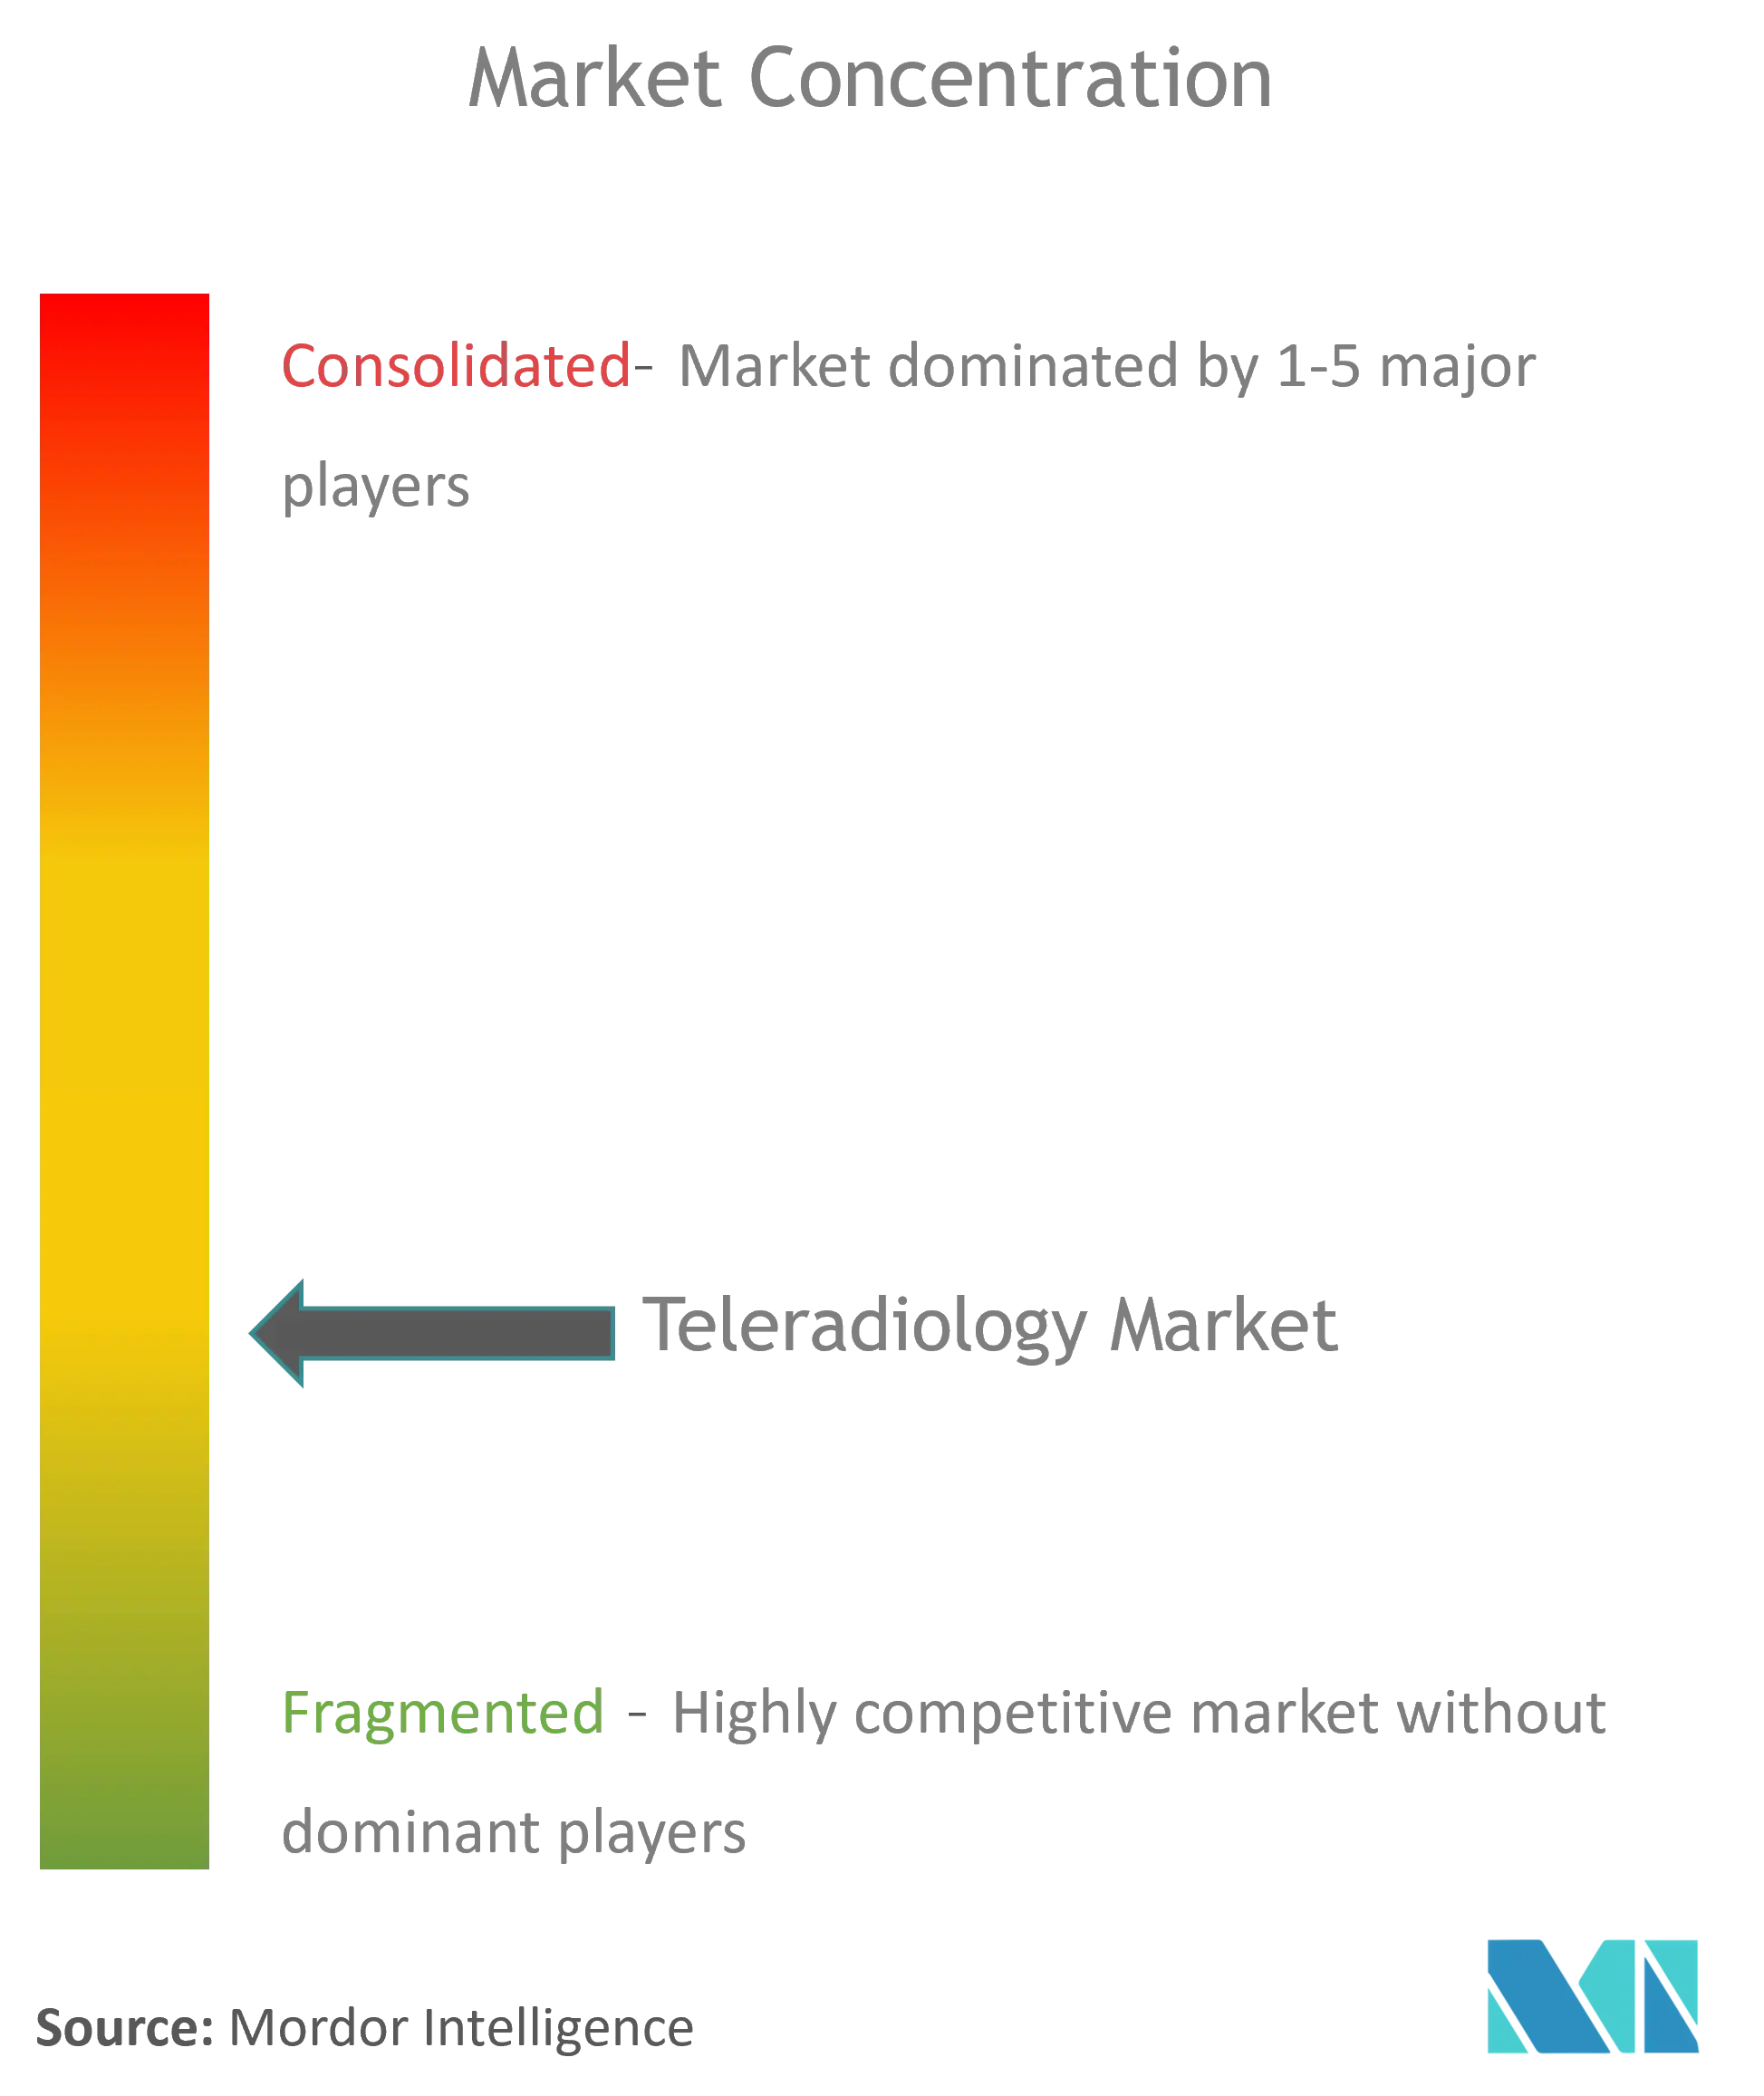 Teleradiology Market Concentration